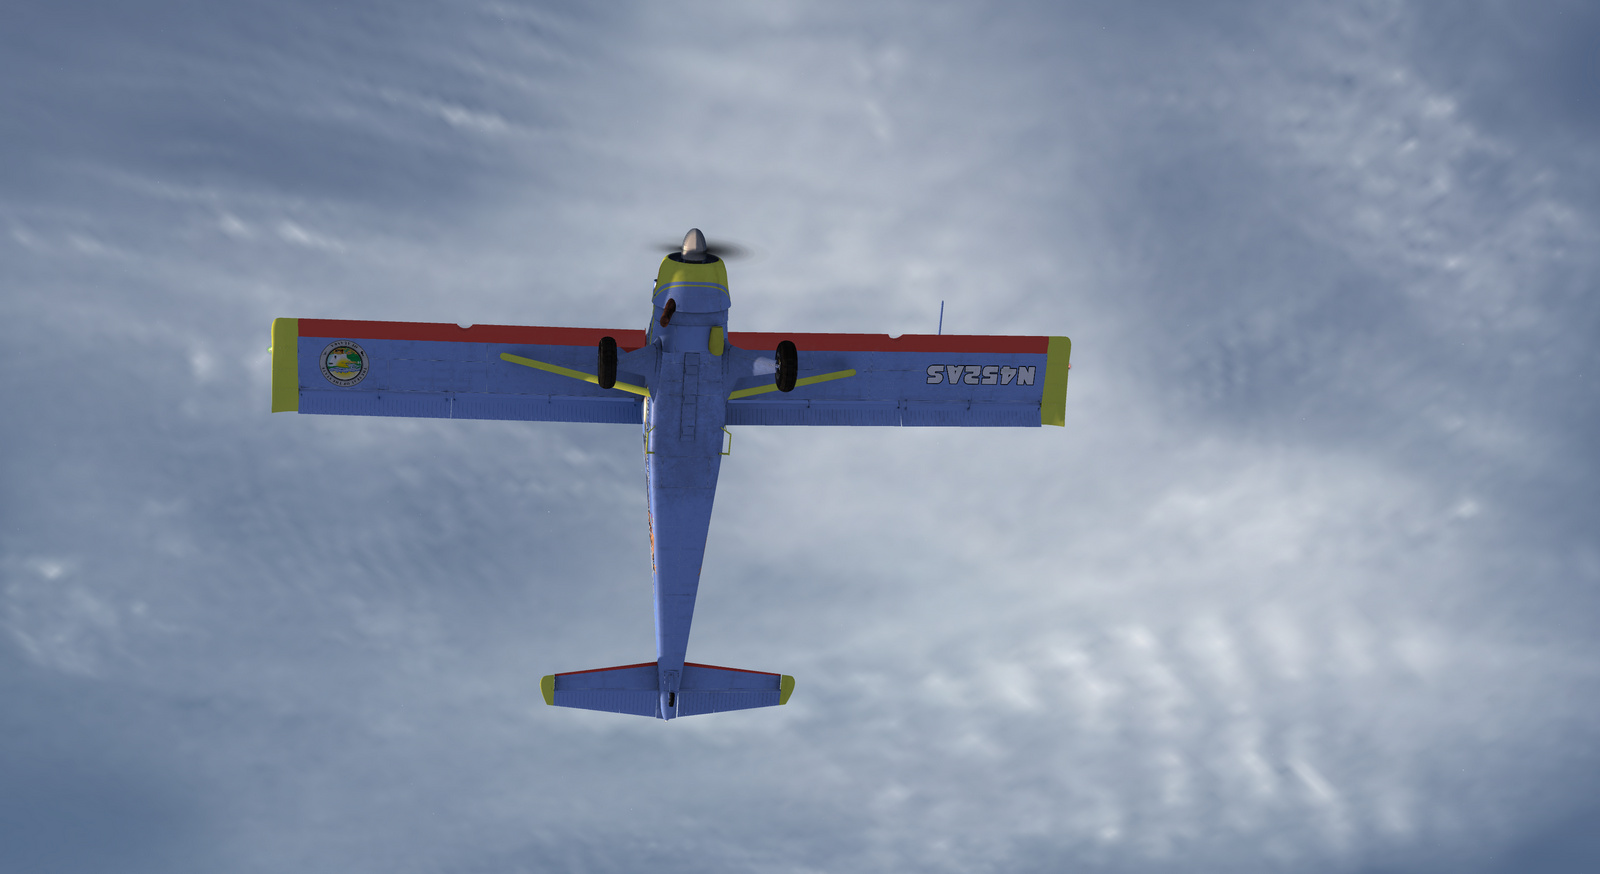 DHC-2 Beaver, Spirit of Alaska, Tundra STOL version, Screenshot 3/19